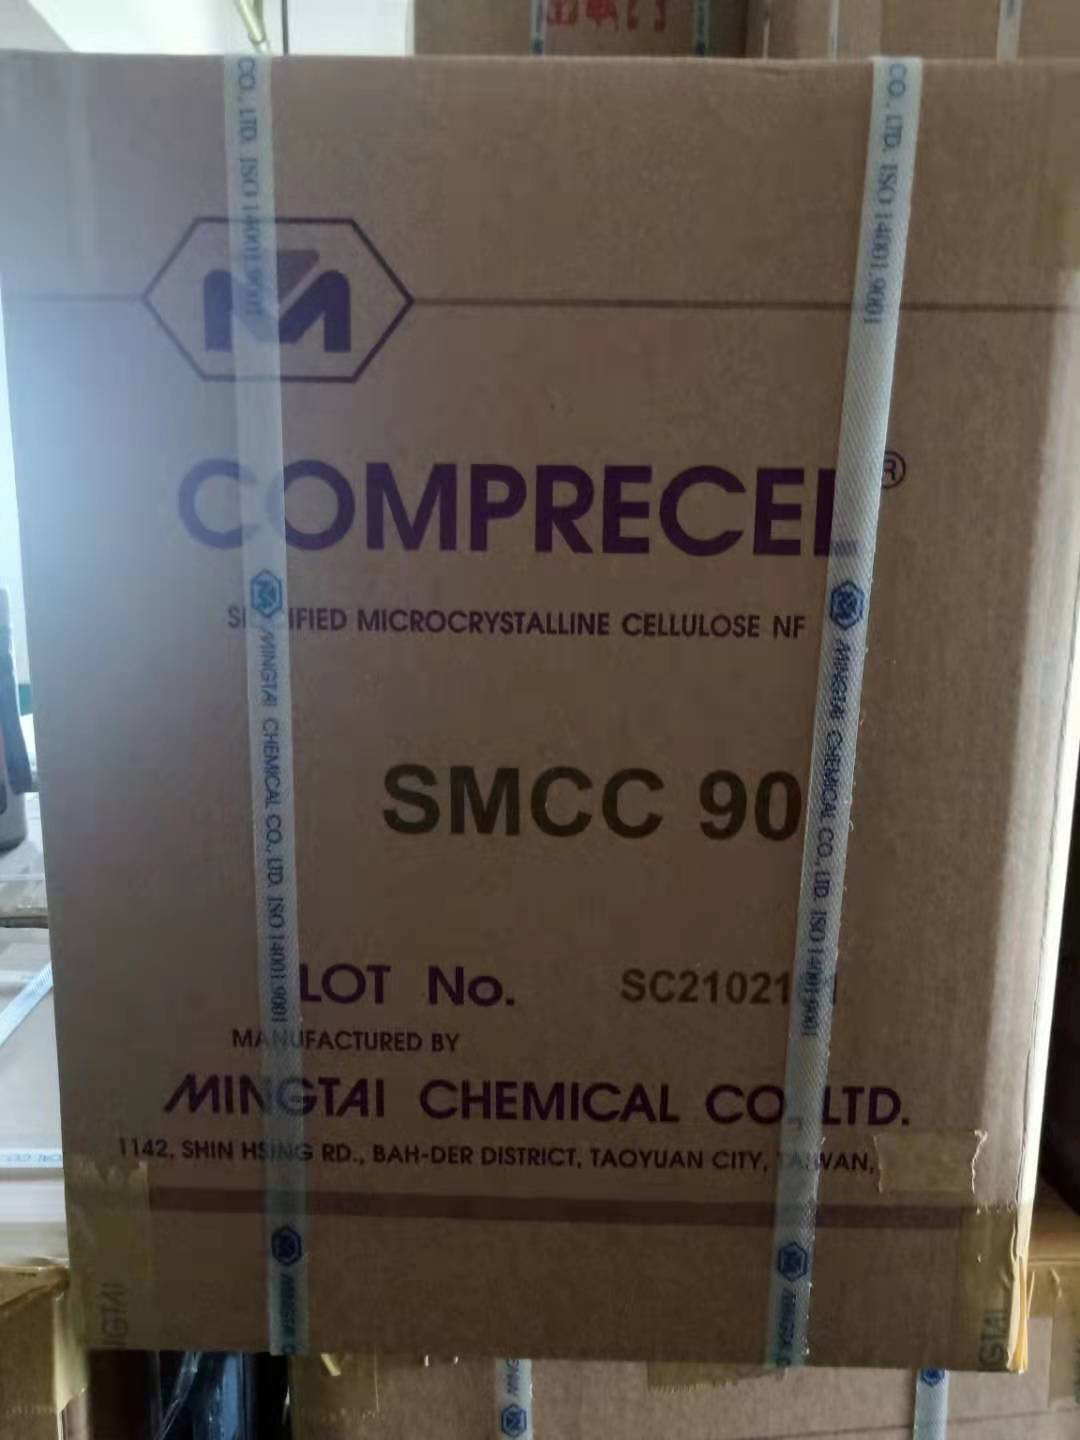 Silicified microcrystalline cellulose SMCC90